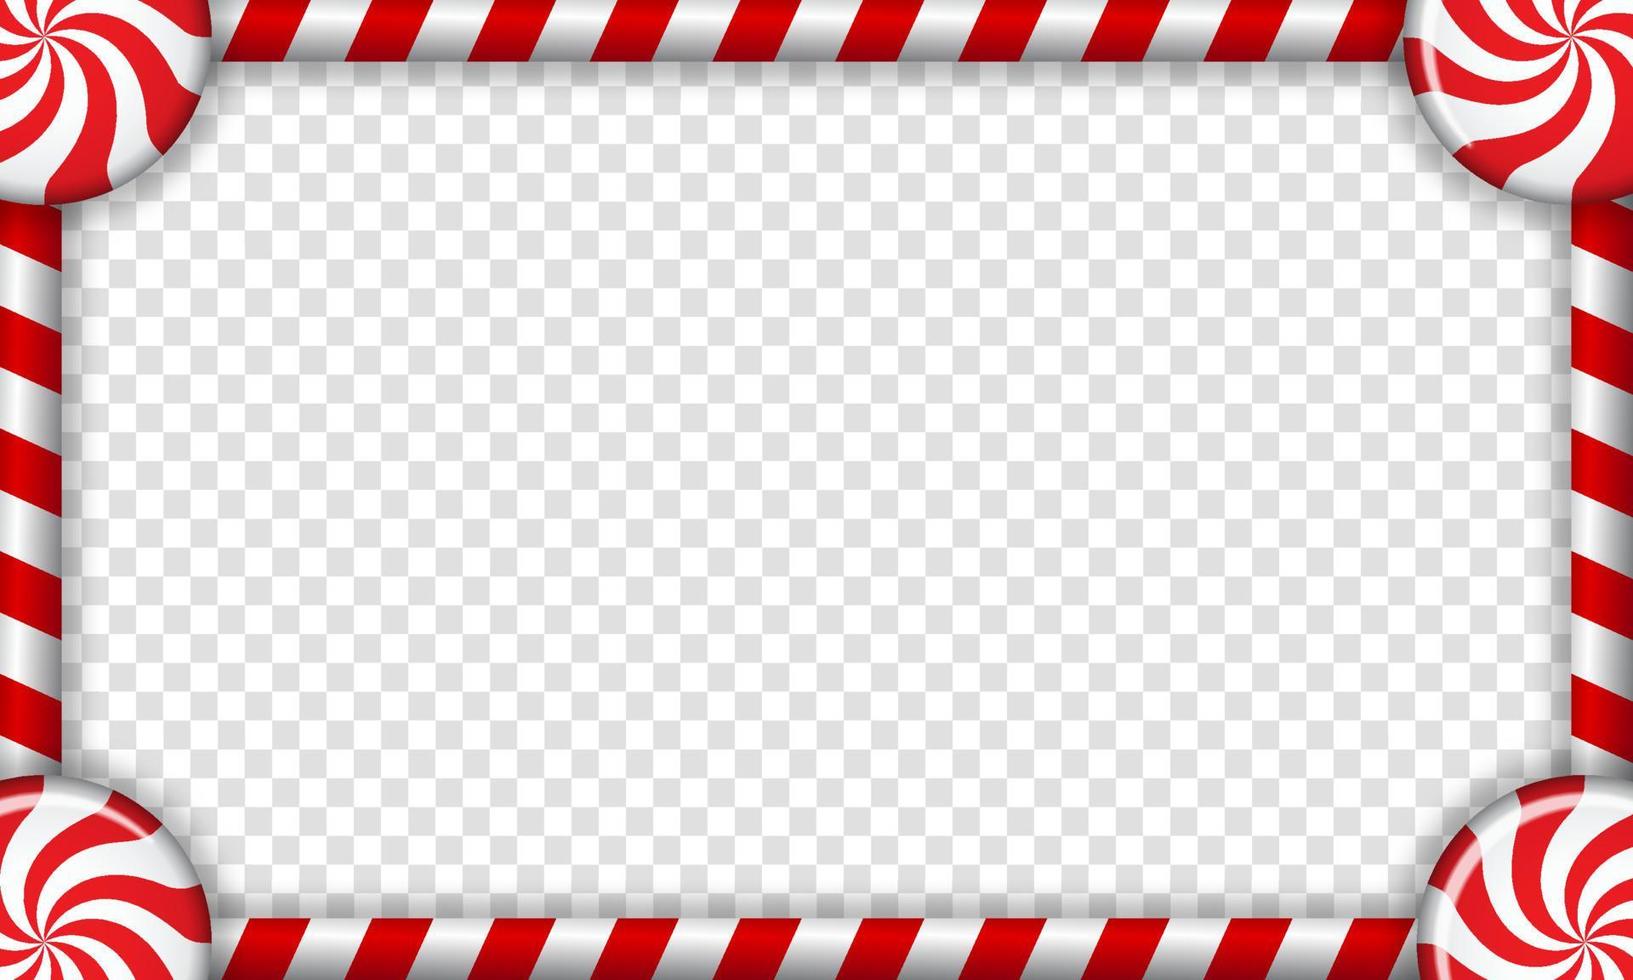 marco de bastón de caramelo rectangular con patrón de paleta de rayas rojas y blancas. ilustración vectorial vector